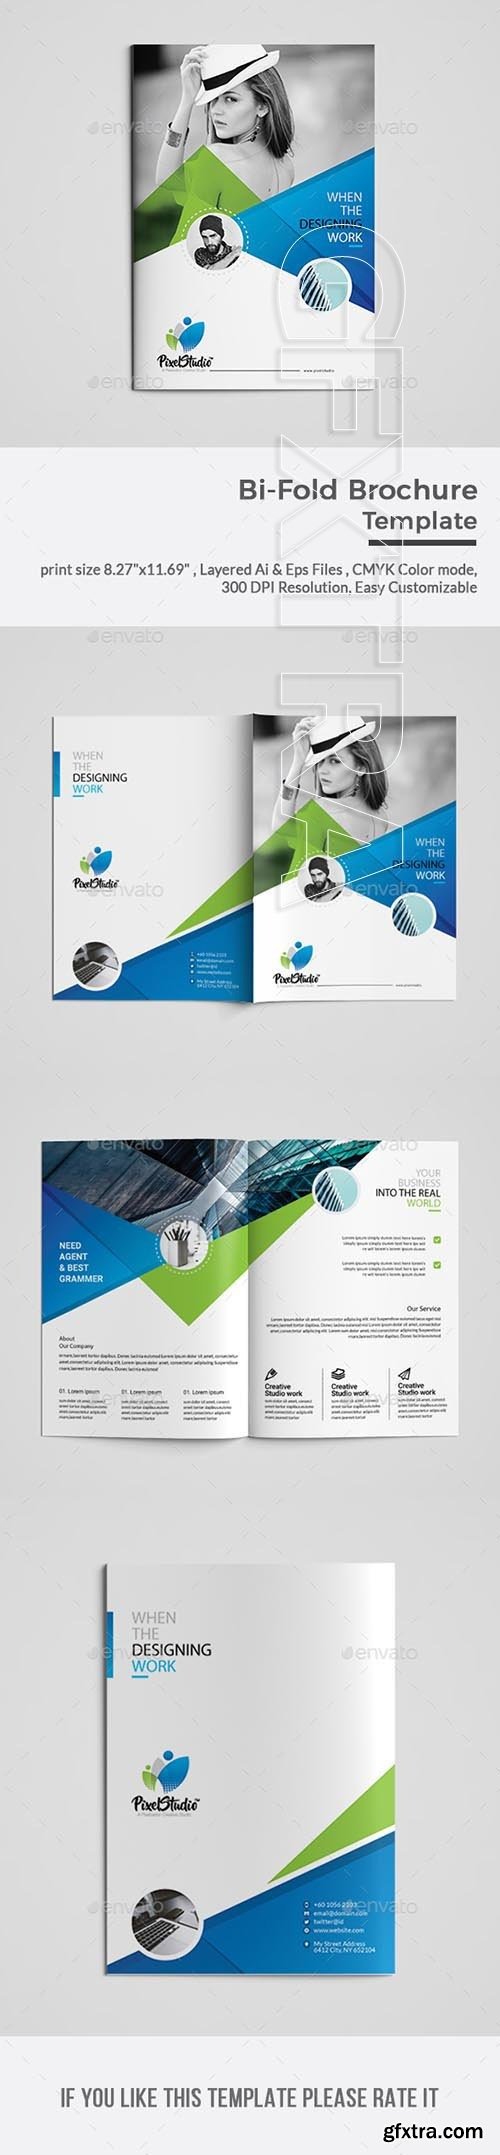 GraphicRiver - Bi-Fold Brochure Template 20852208